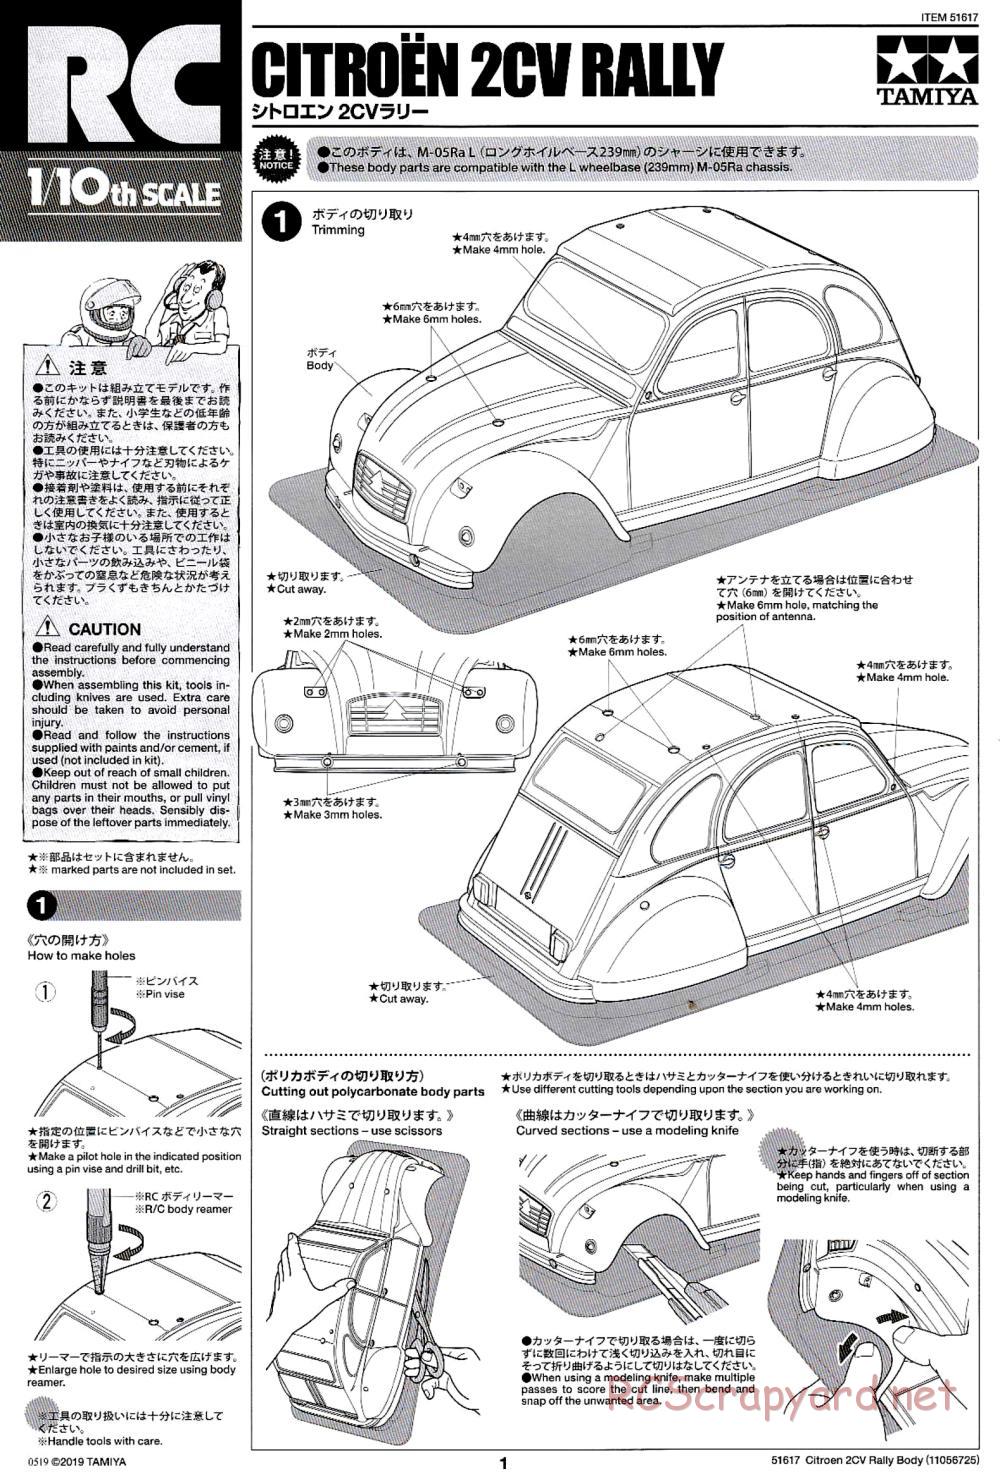 Tamiya - Citroen 2CV Rally - M-05Ra Chassis - Body Manual - Page 1